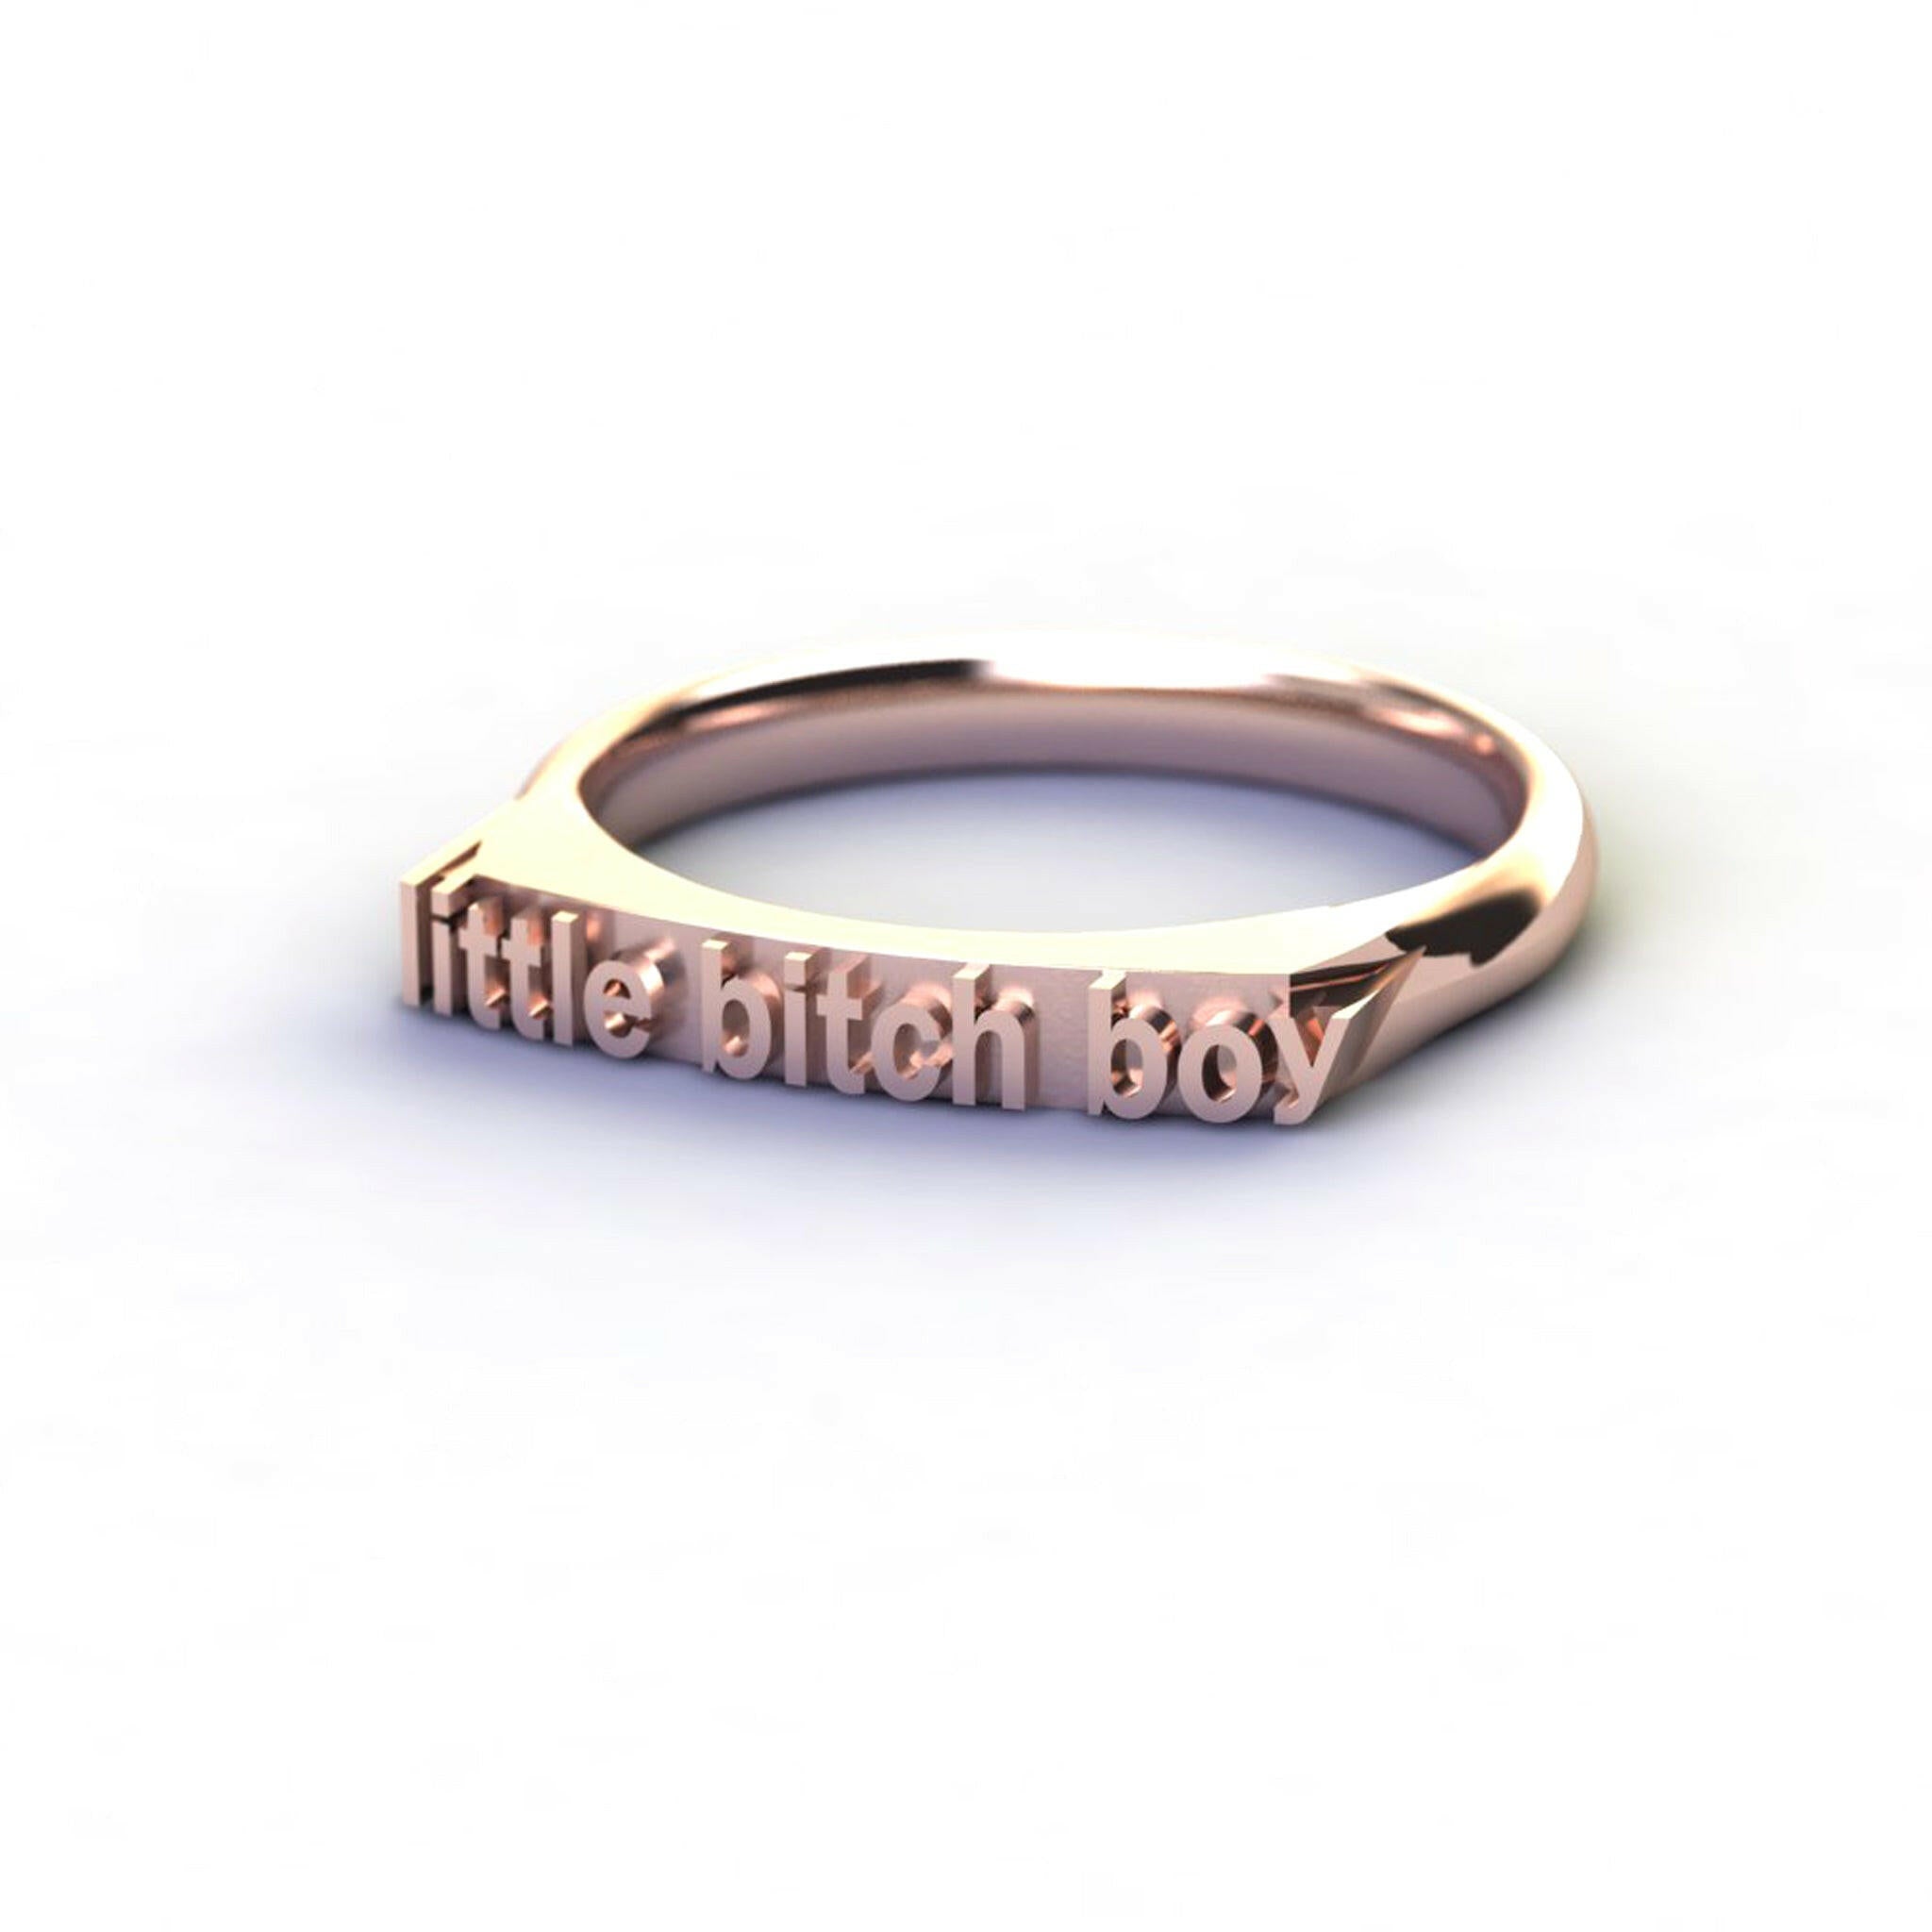 little bitch boy - Ilah Cibis Jewelry-Rings